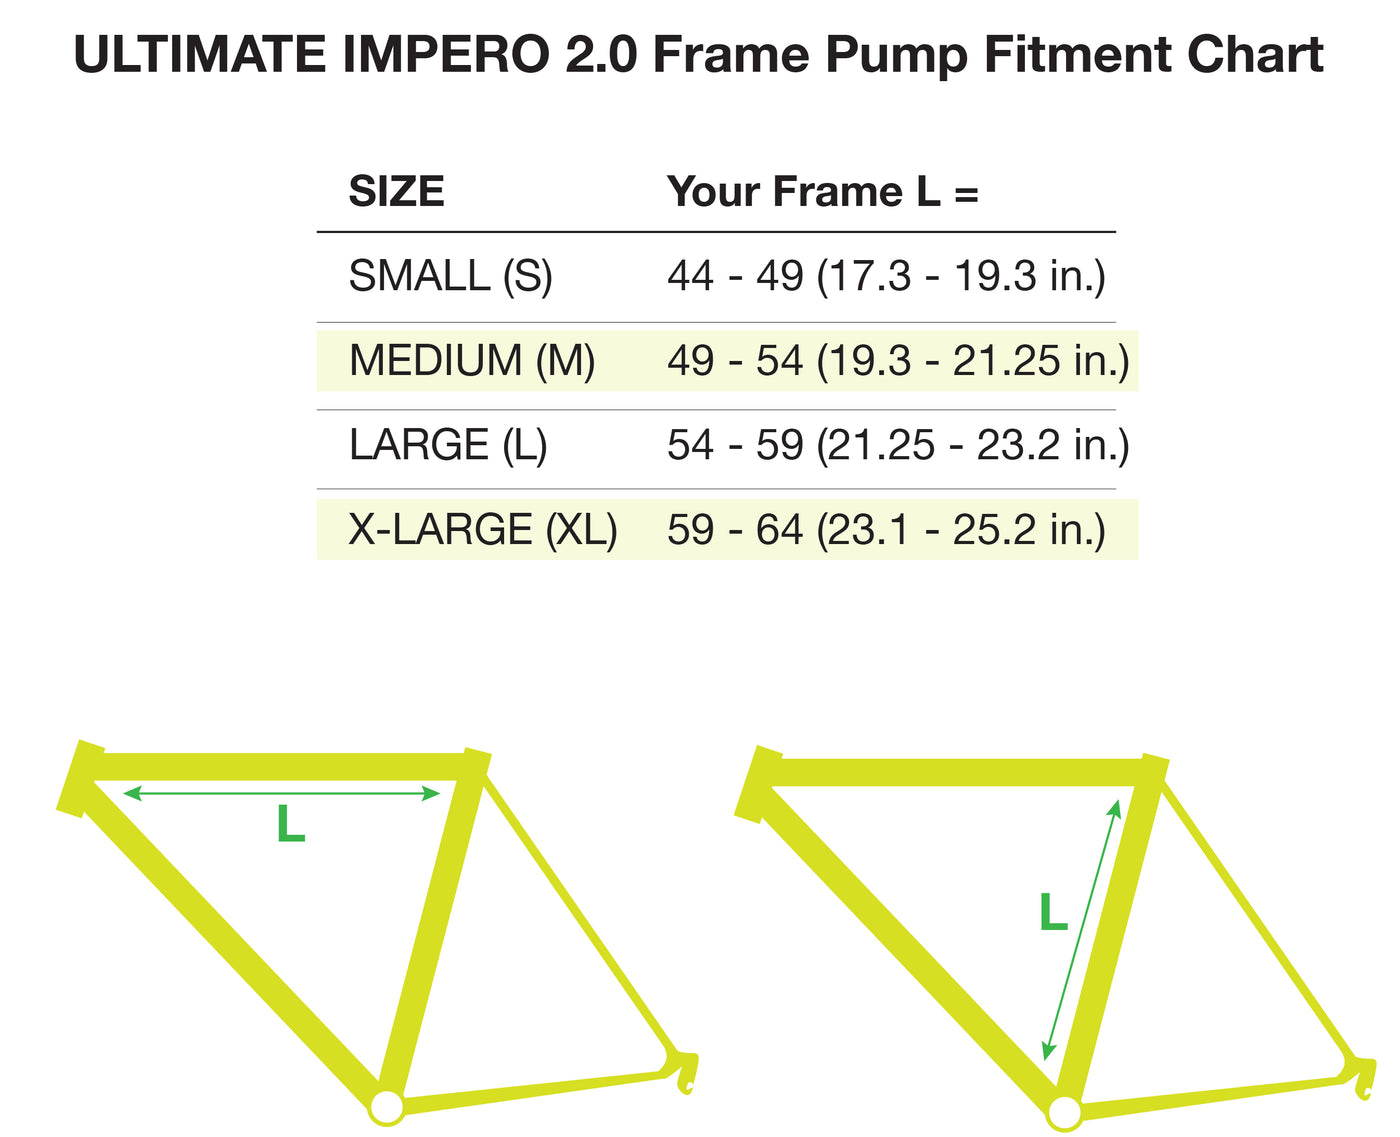 Impero Ultimate II Frame Pump